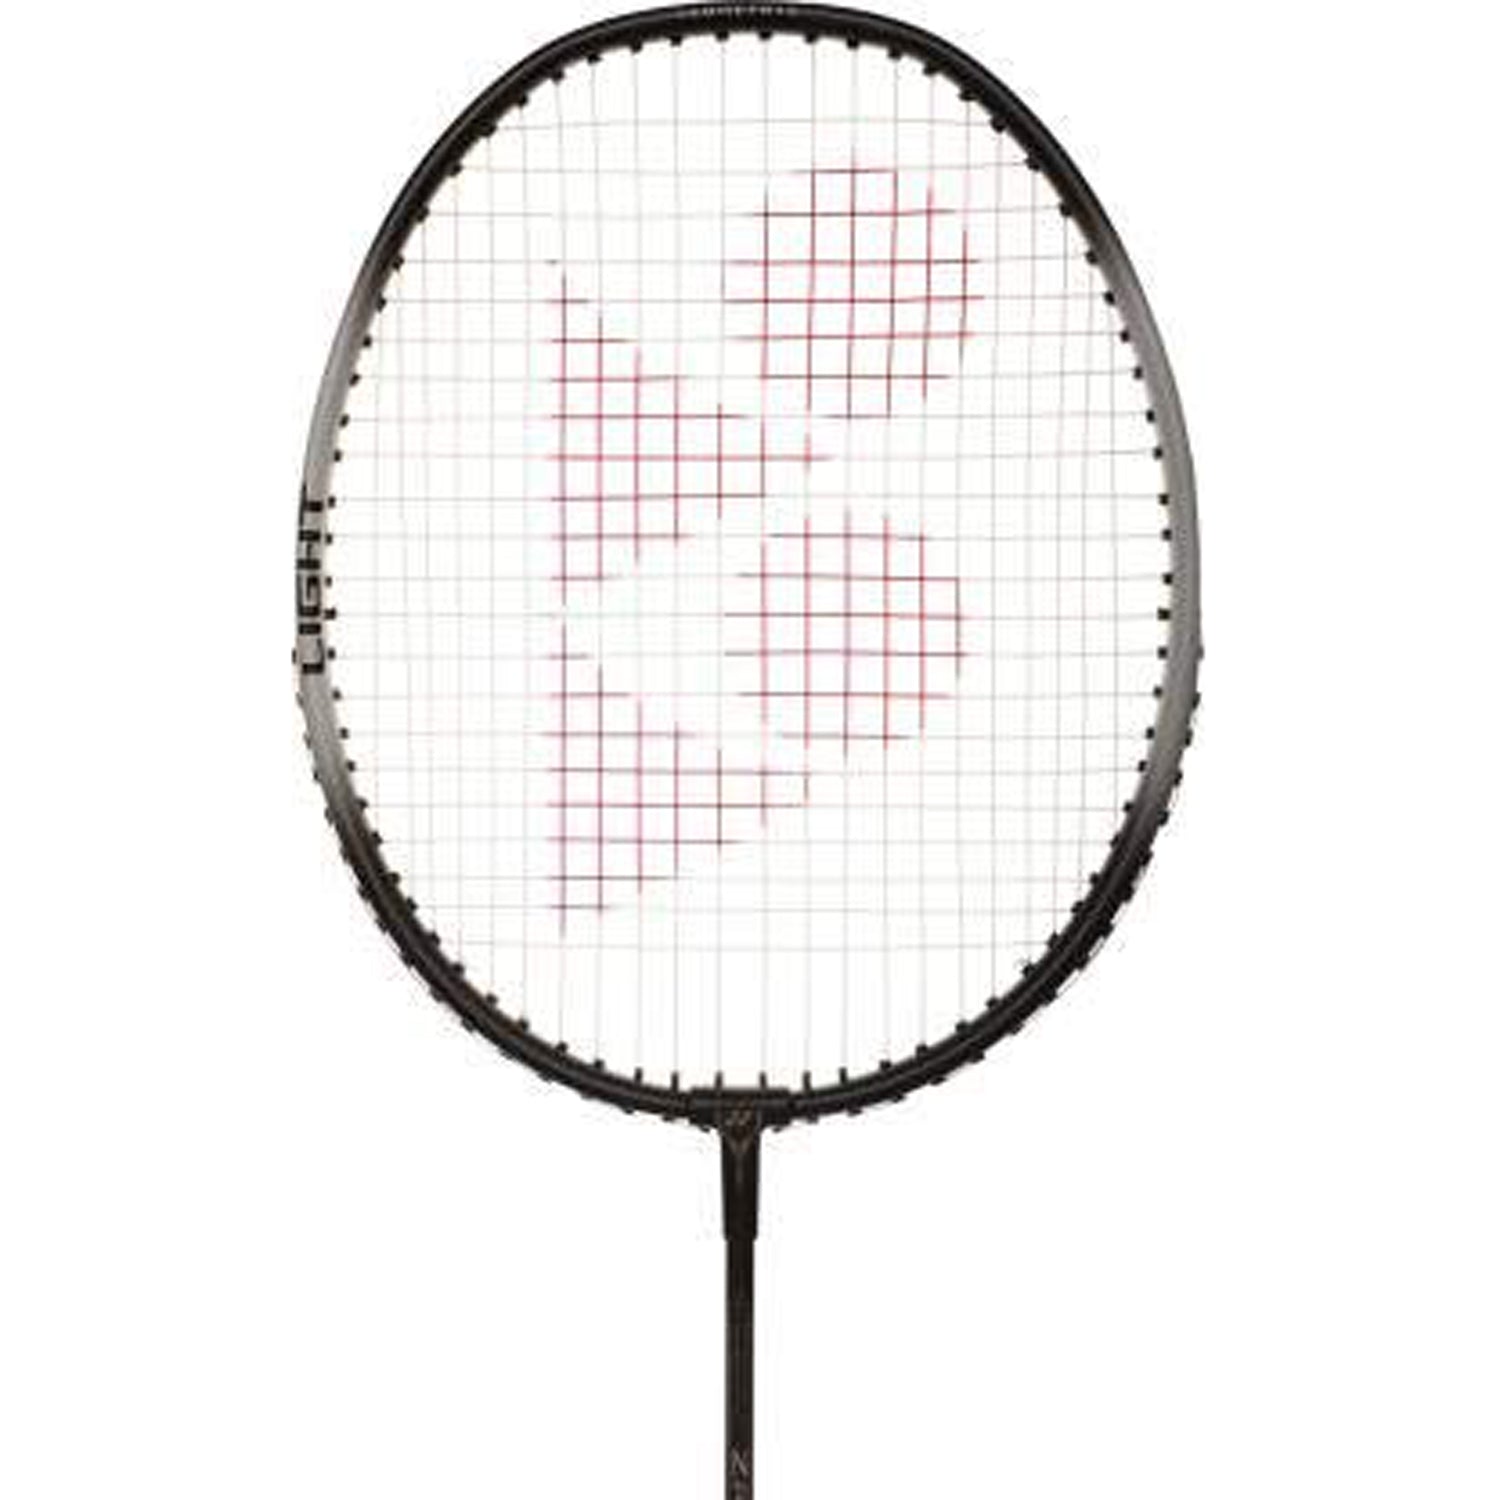 Yonex ZR 100 Light Aluminum Badminton Racquet Strung, Grip Size G4 (Charcoal) - Best Price online Prokicksports.com